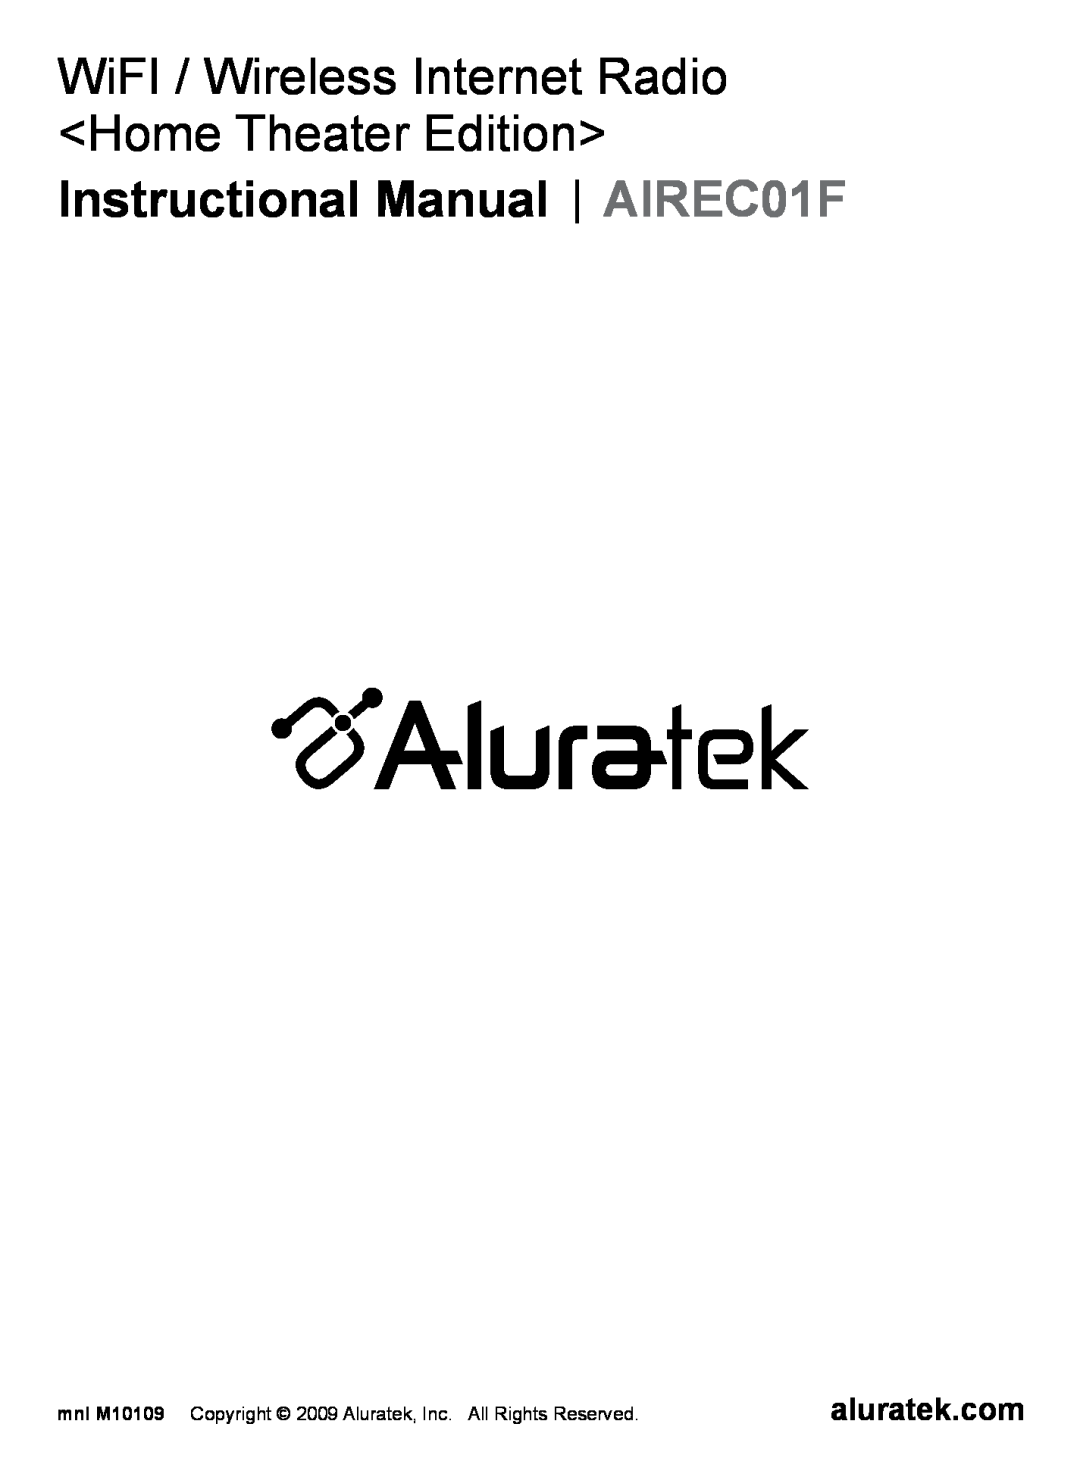 Aluratek manual Instructional Manual AIREC01F 